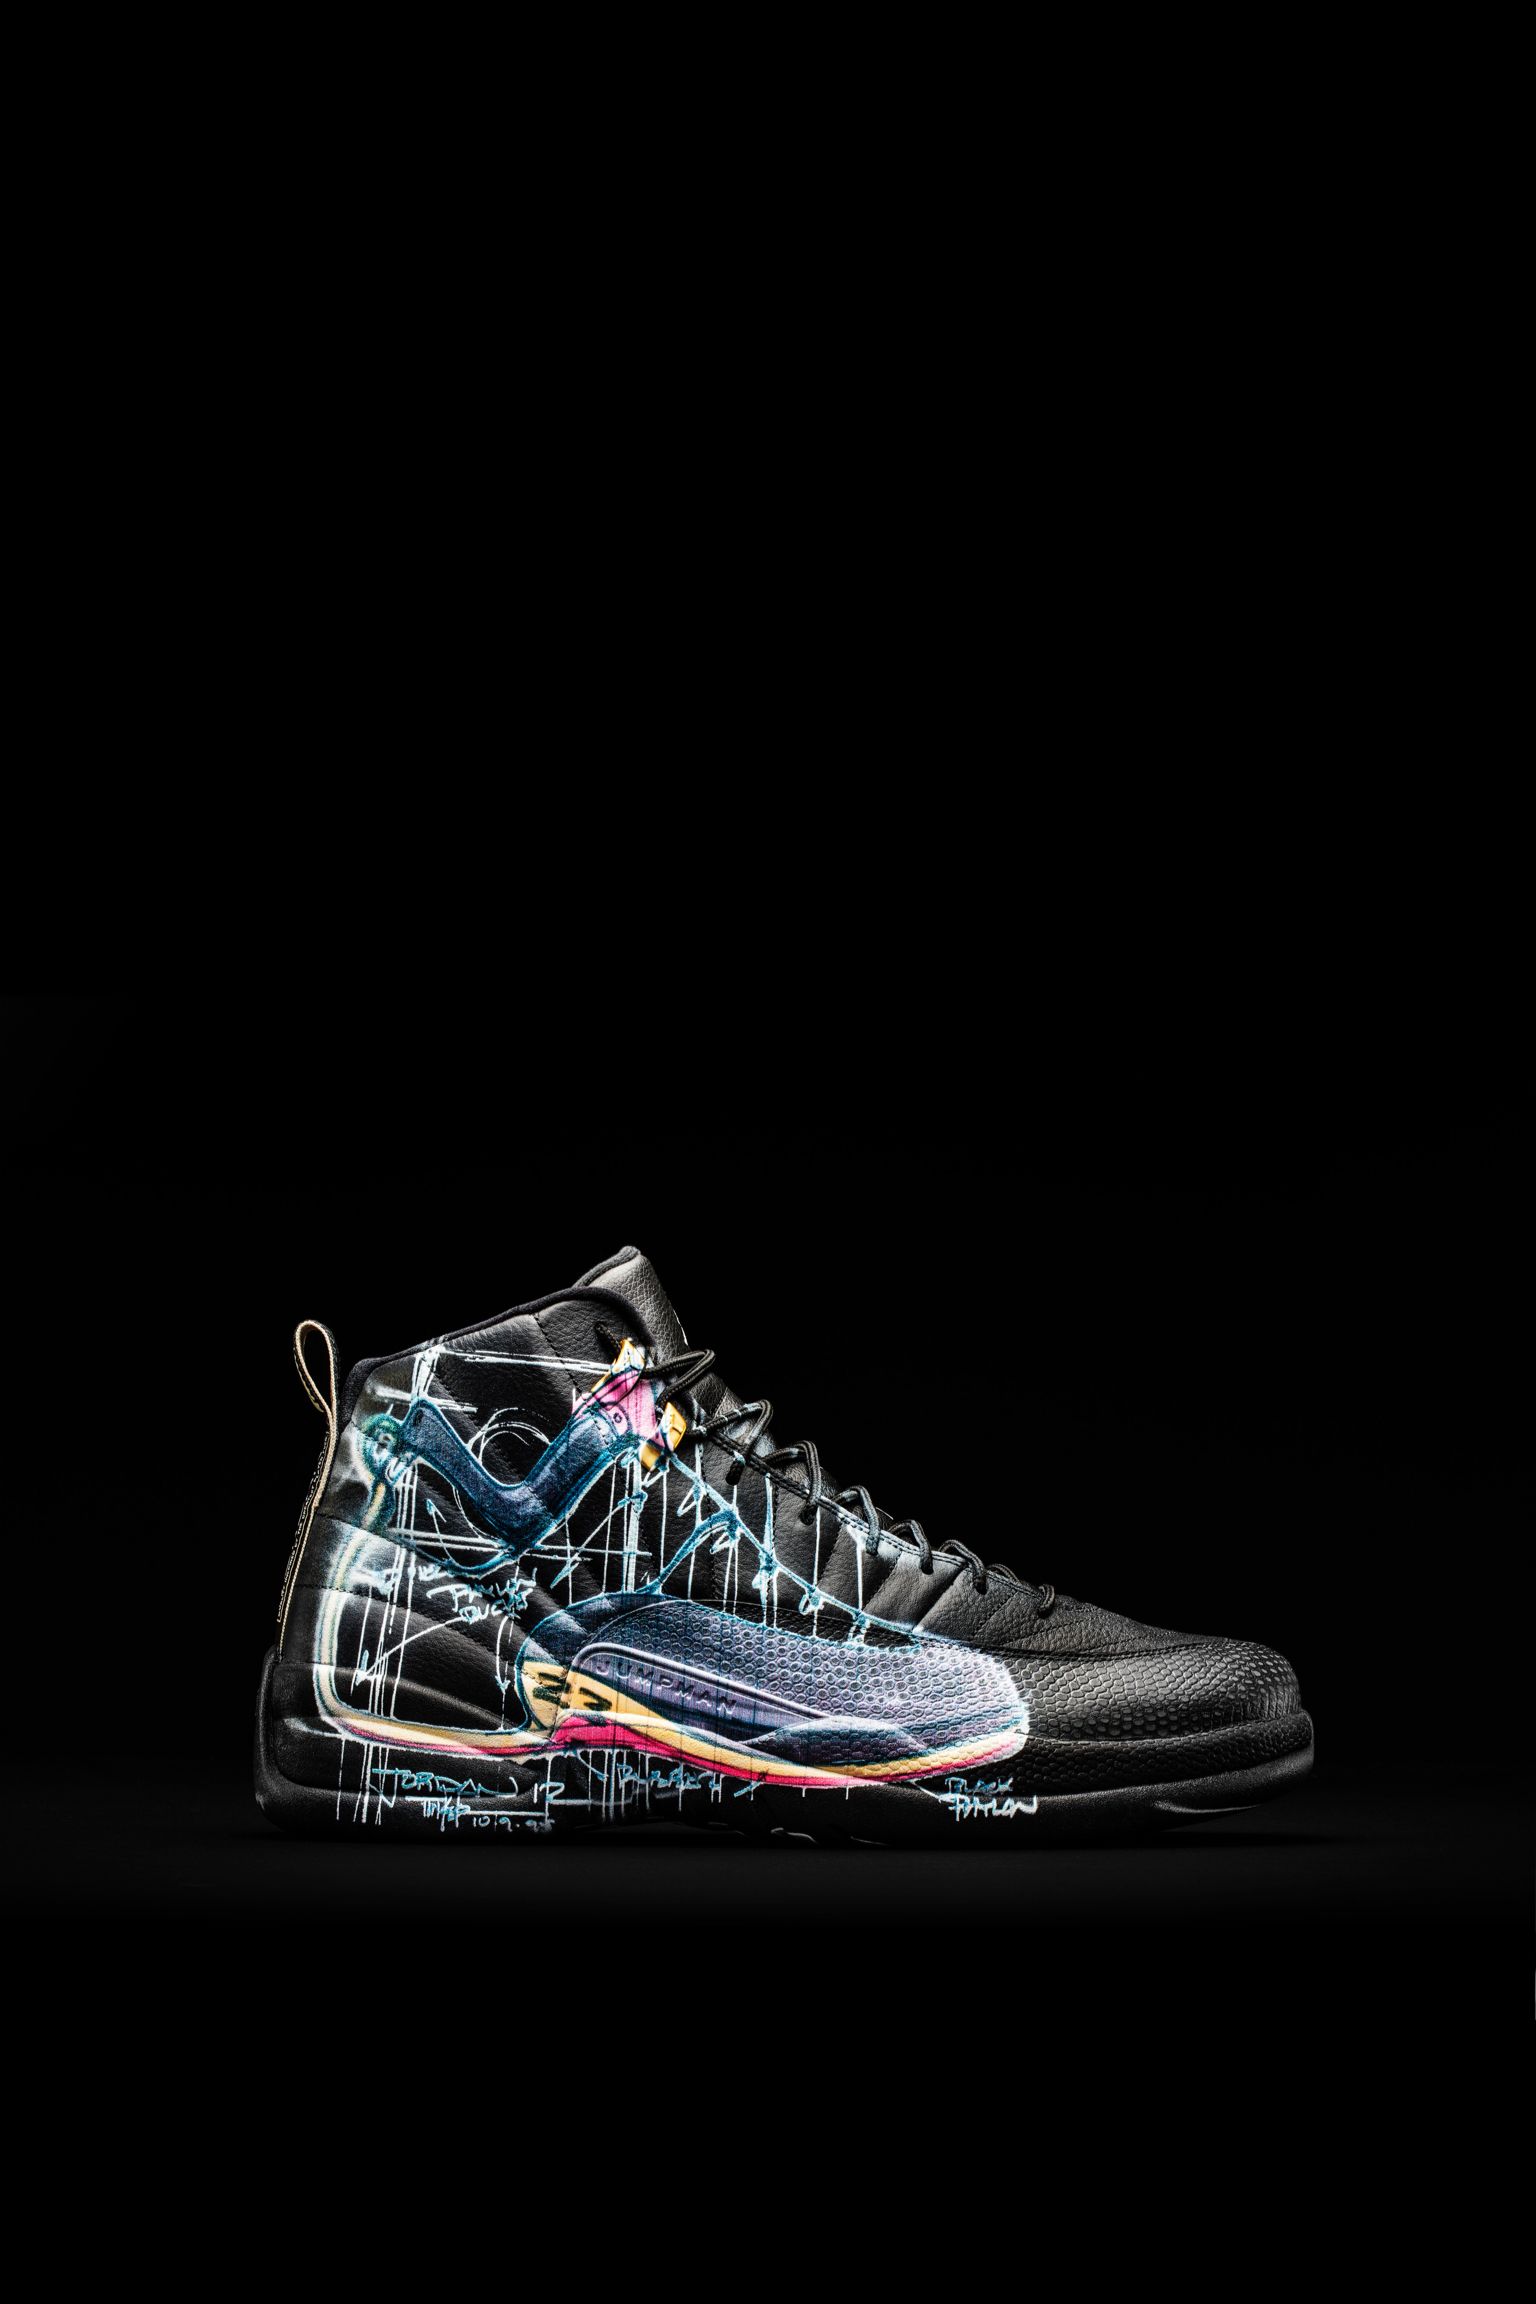 Air Jordan 12 Doernbecher 'Mark Smith' Auction. Nike SNKRS